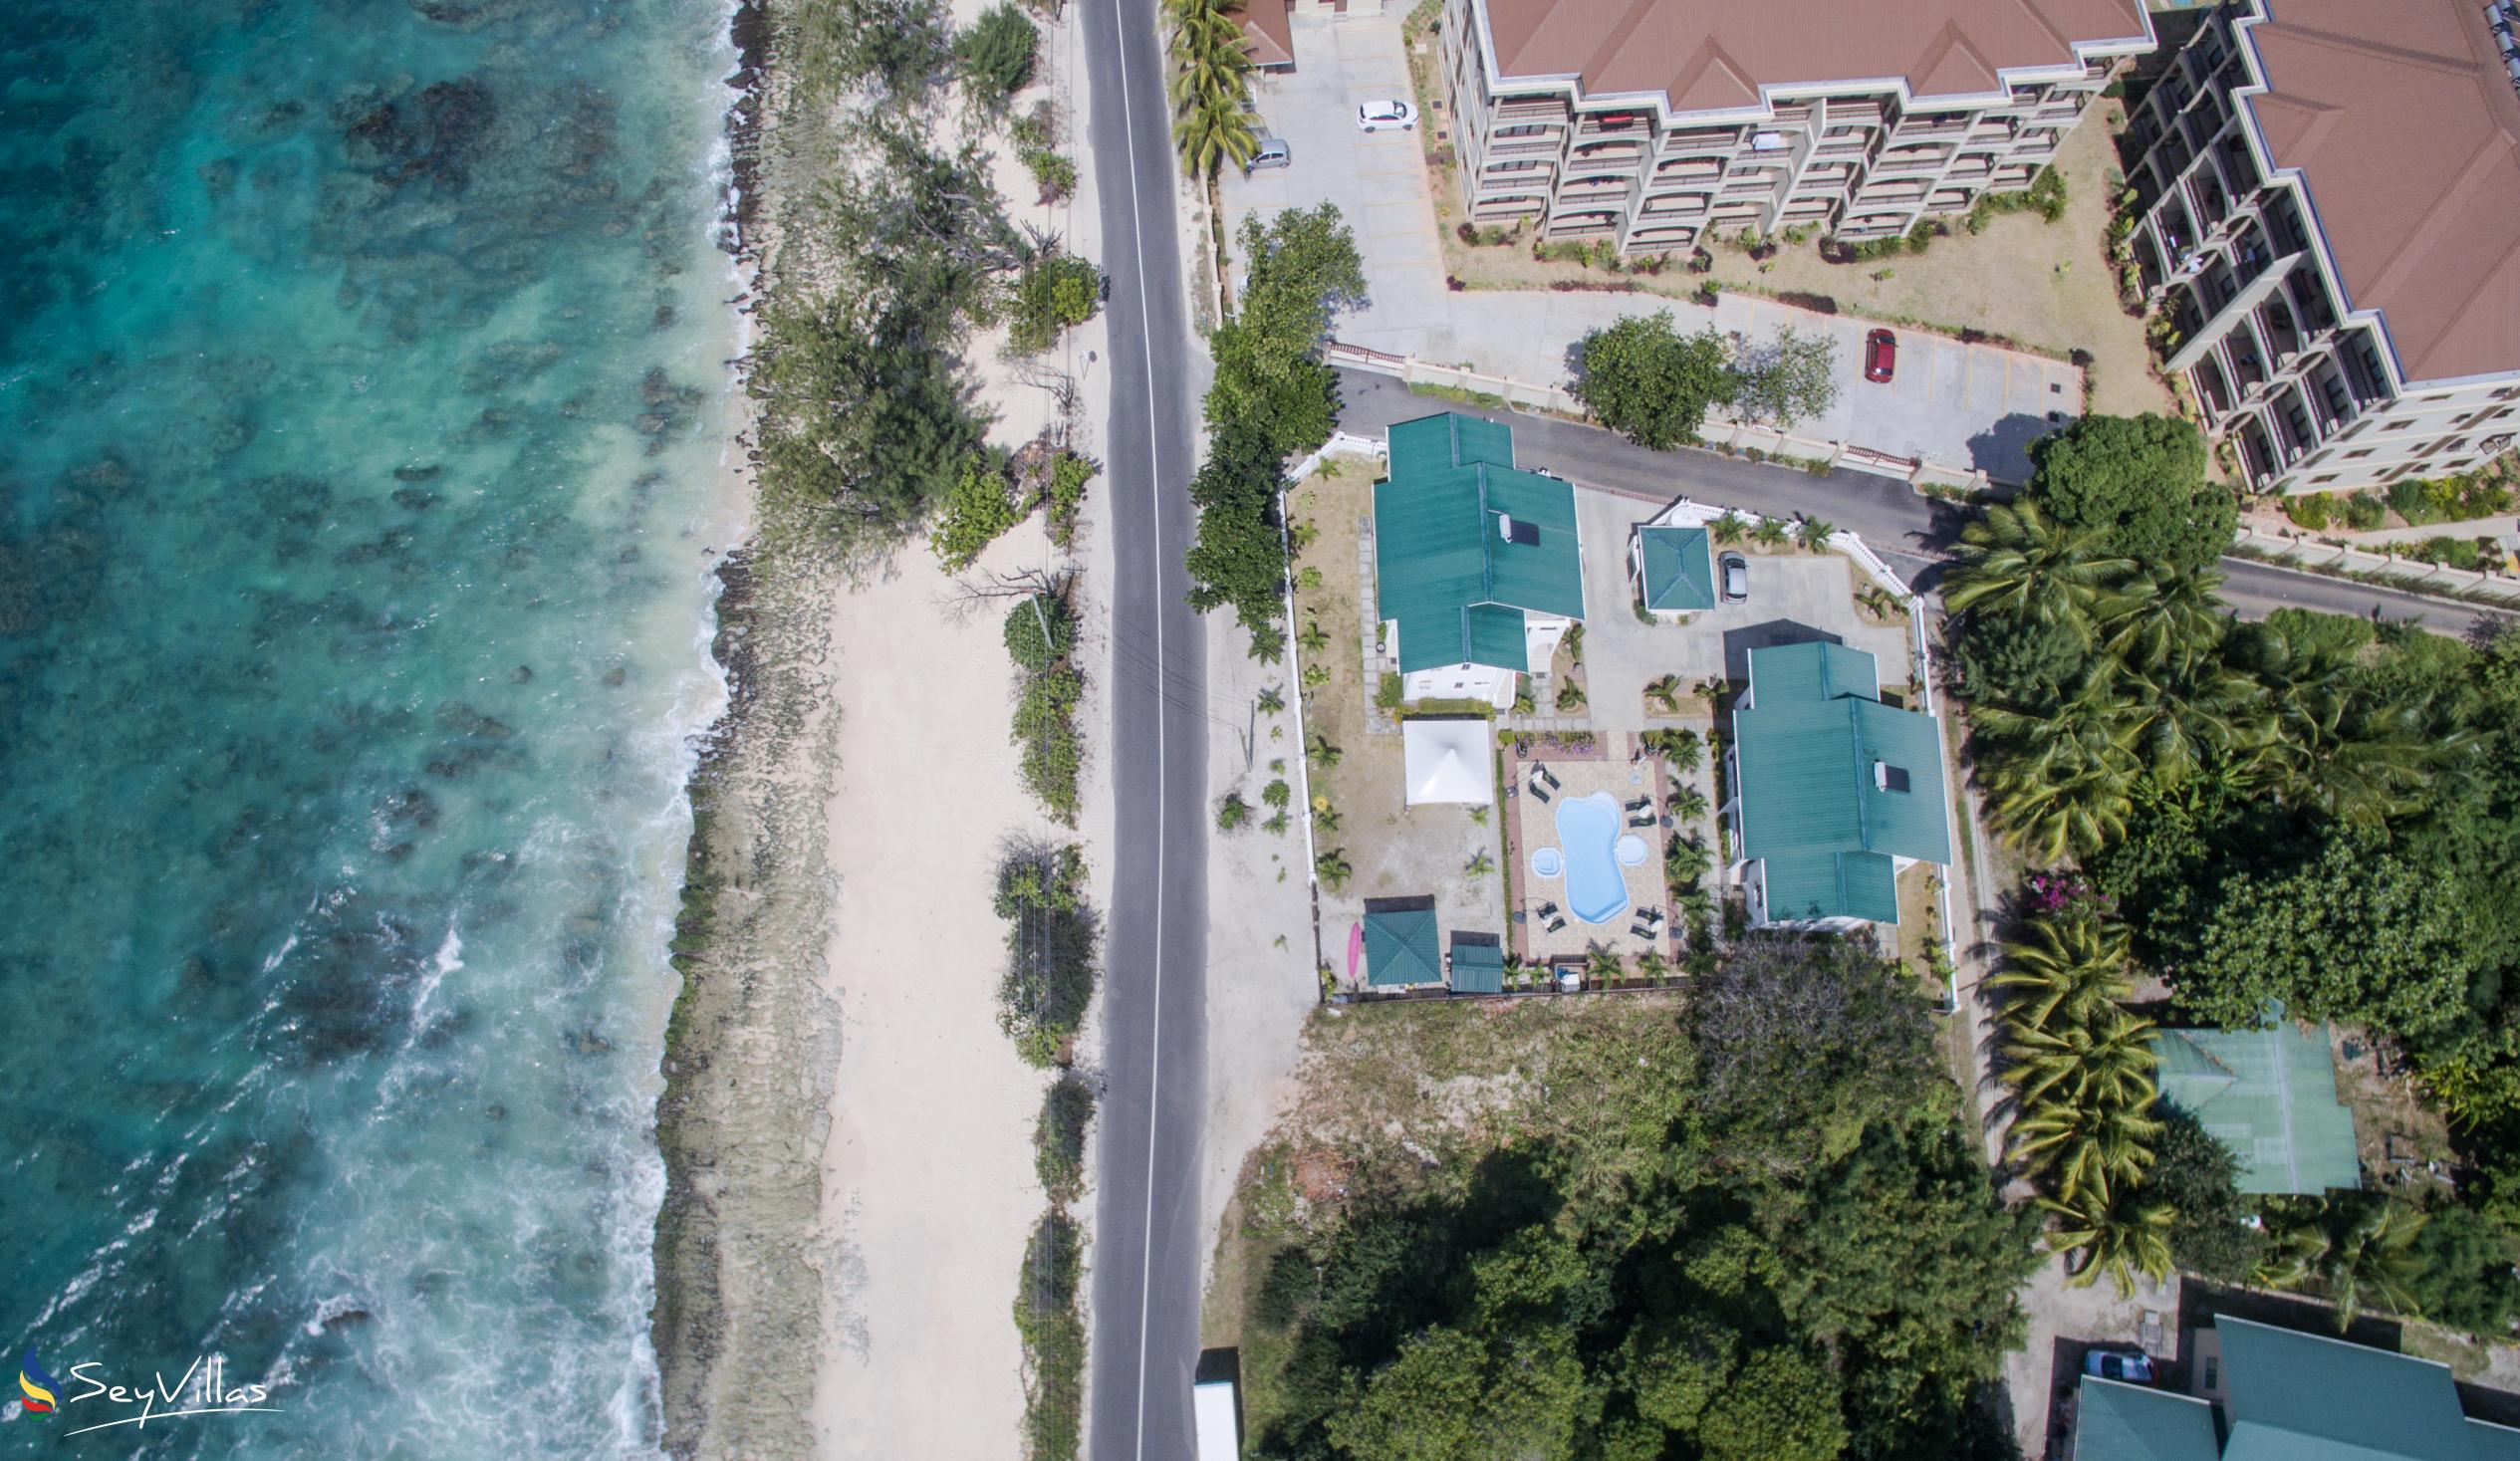 Photo 12: Villa Koket - Outdoor area - Mahé (Seychelles)